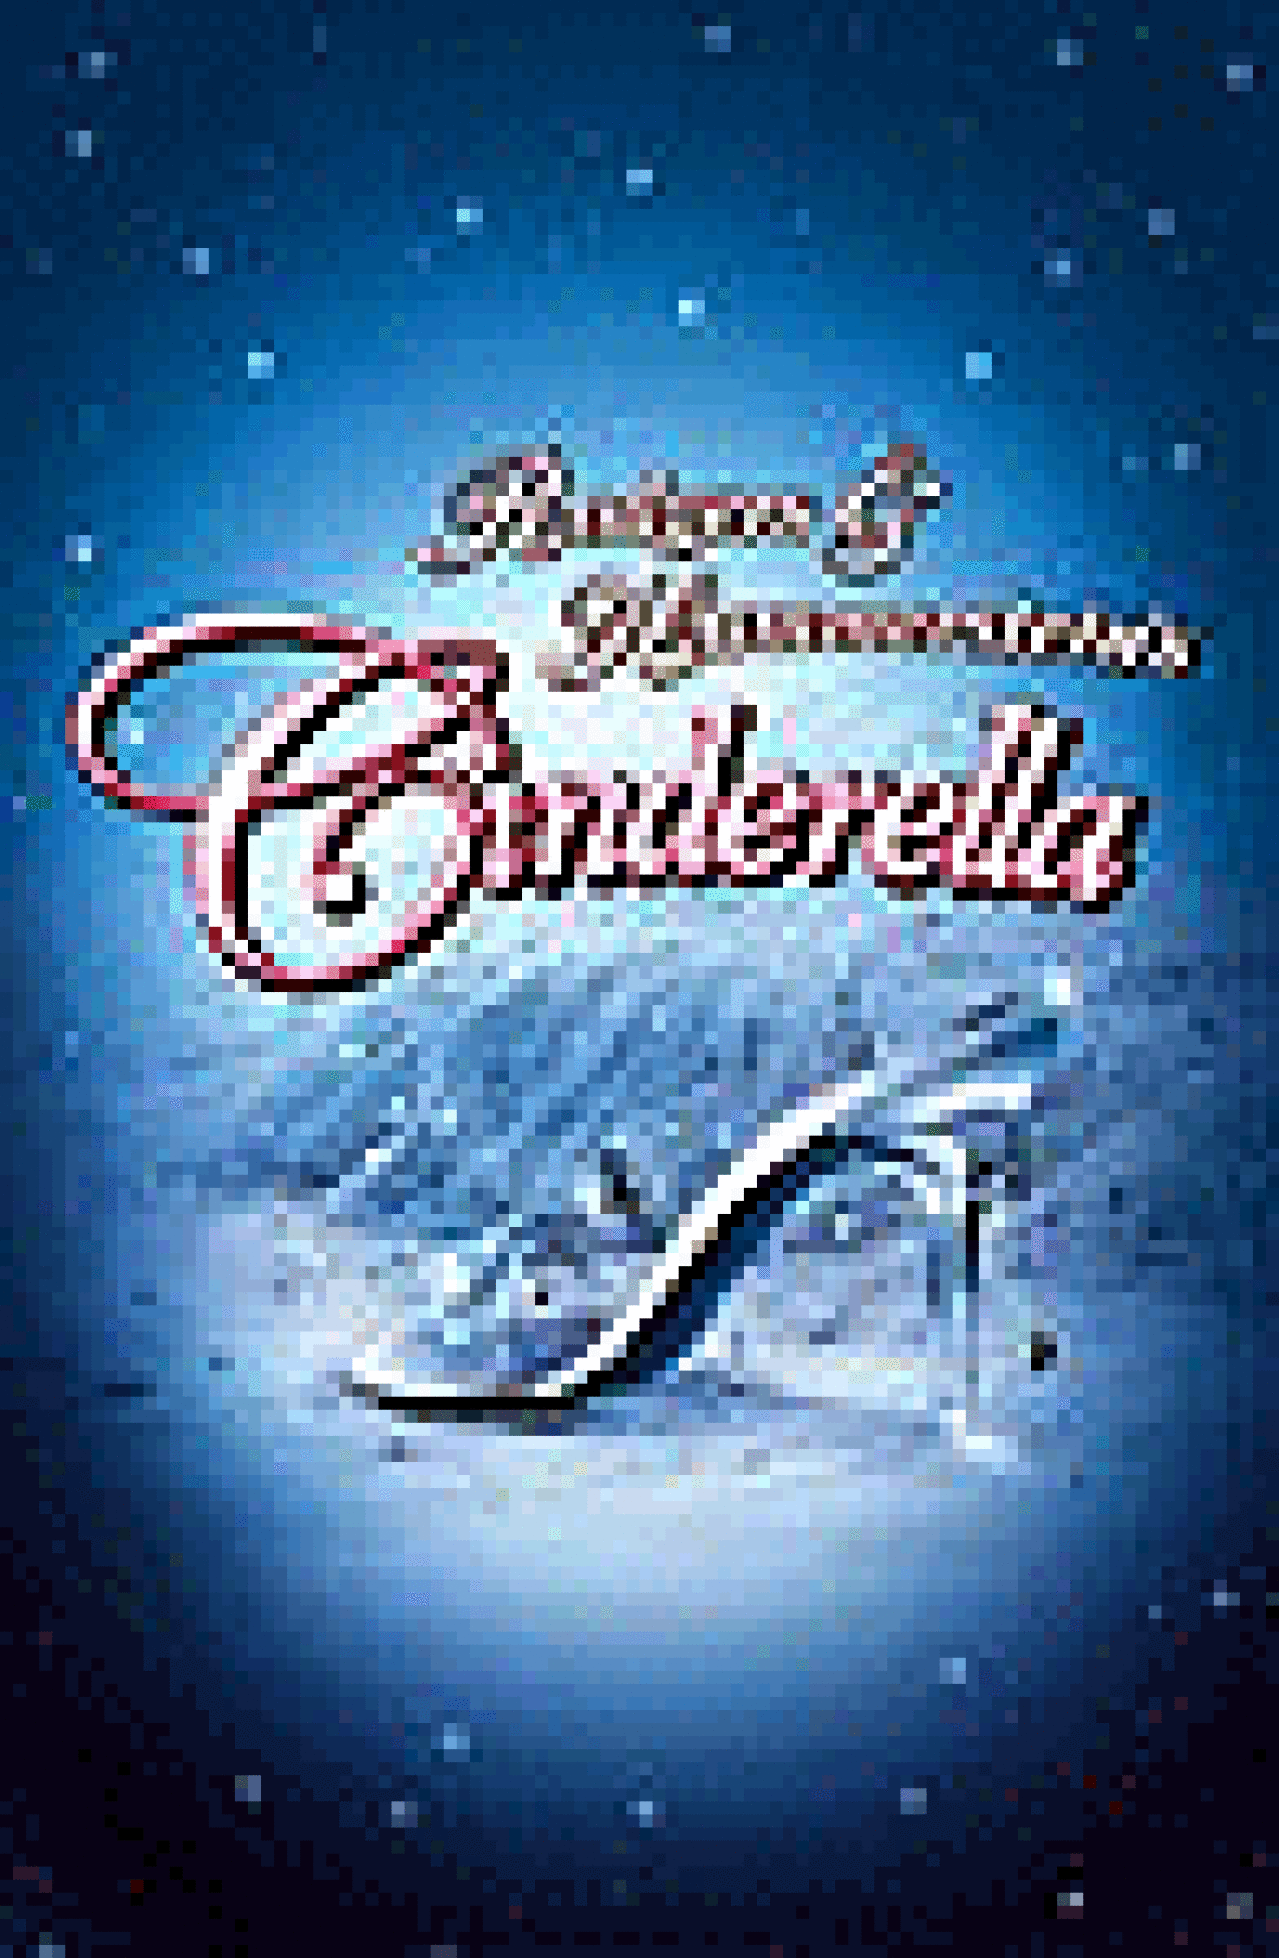 cinderella logo Broadway shows and tickets